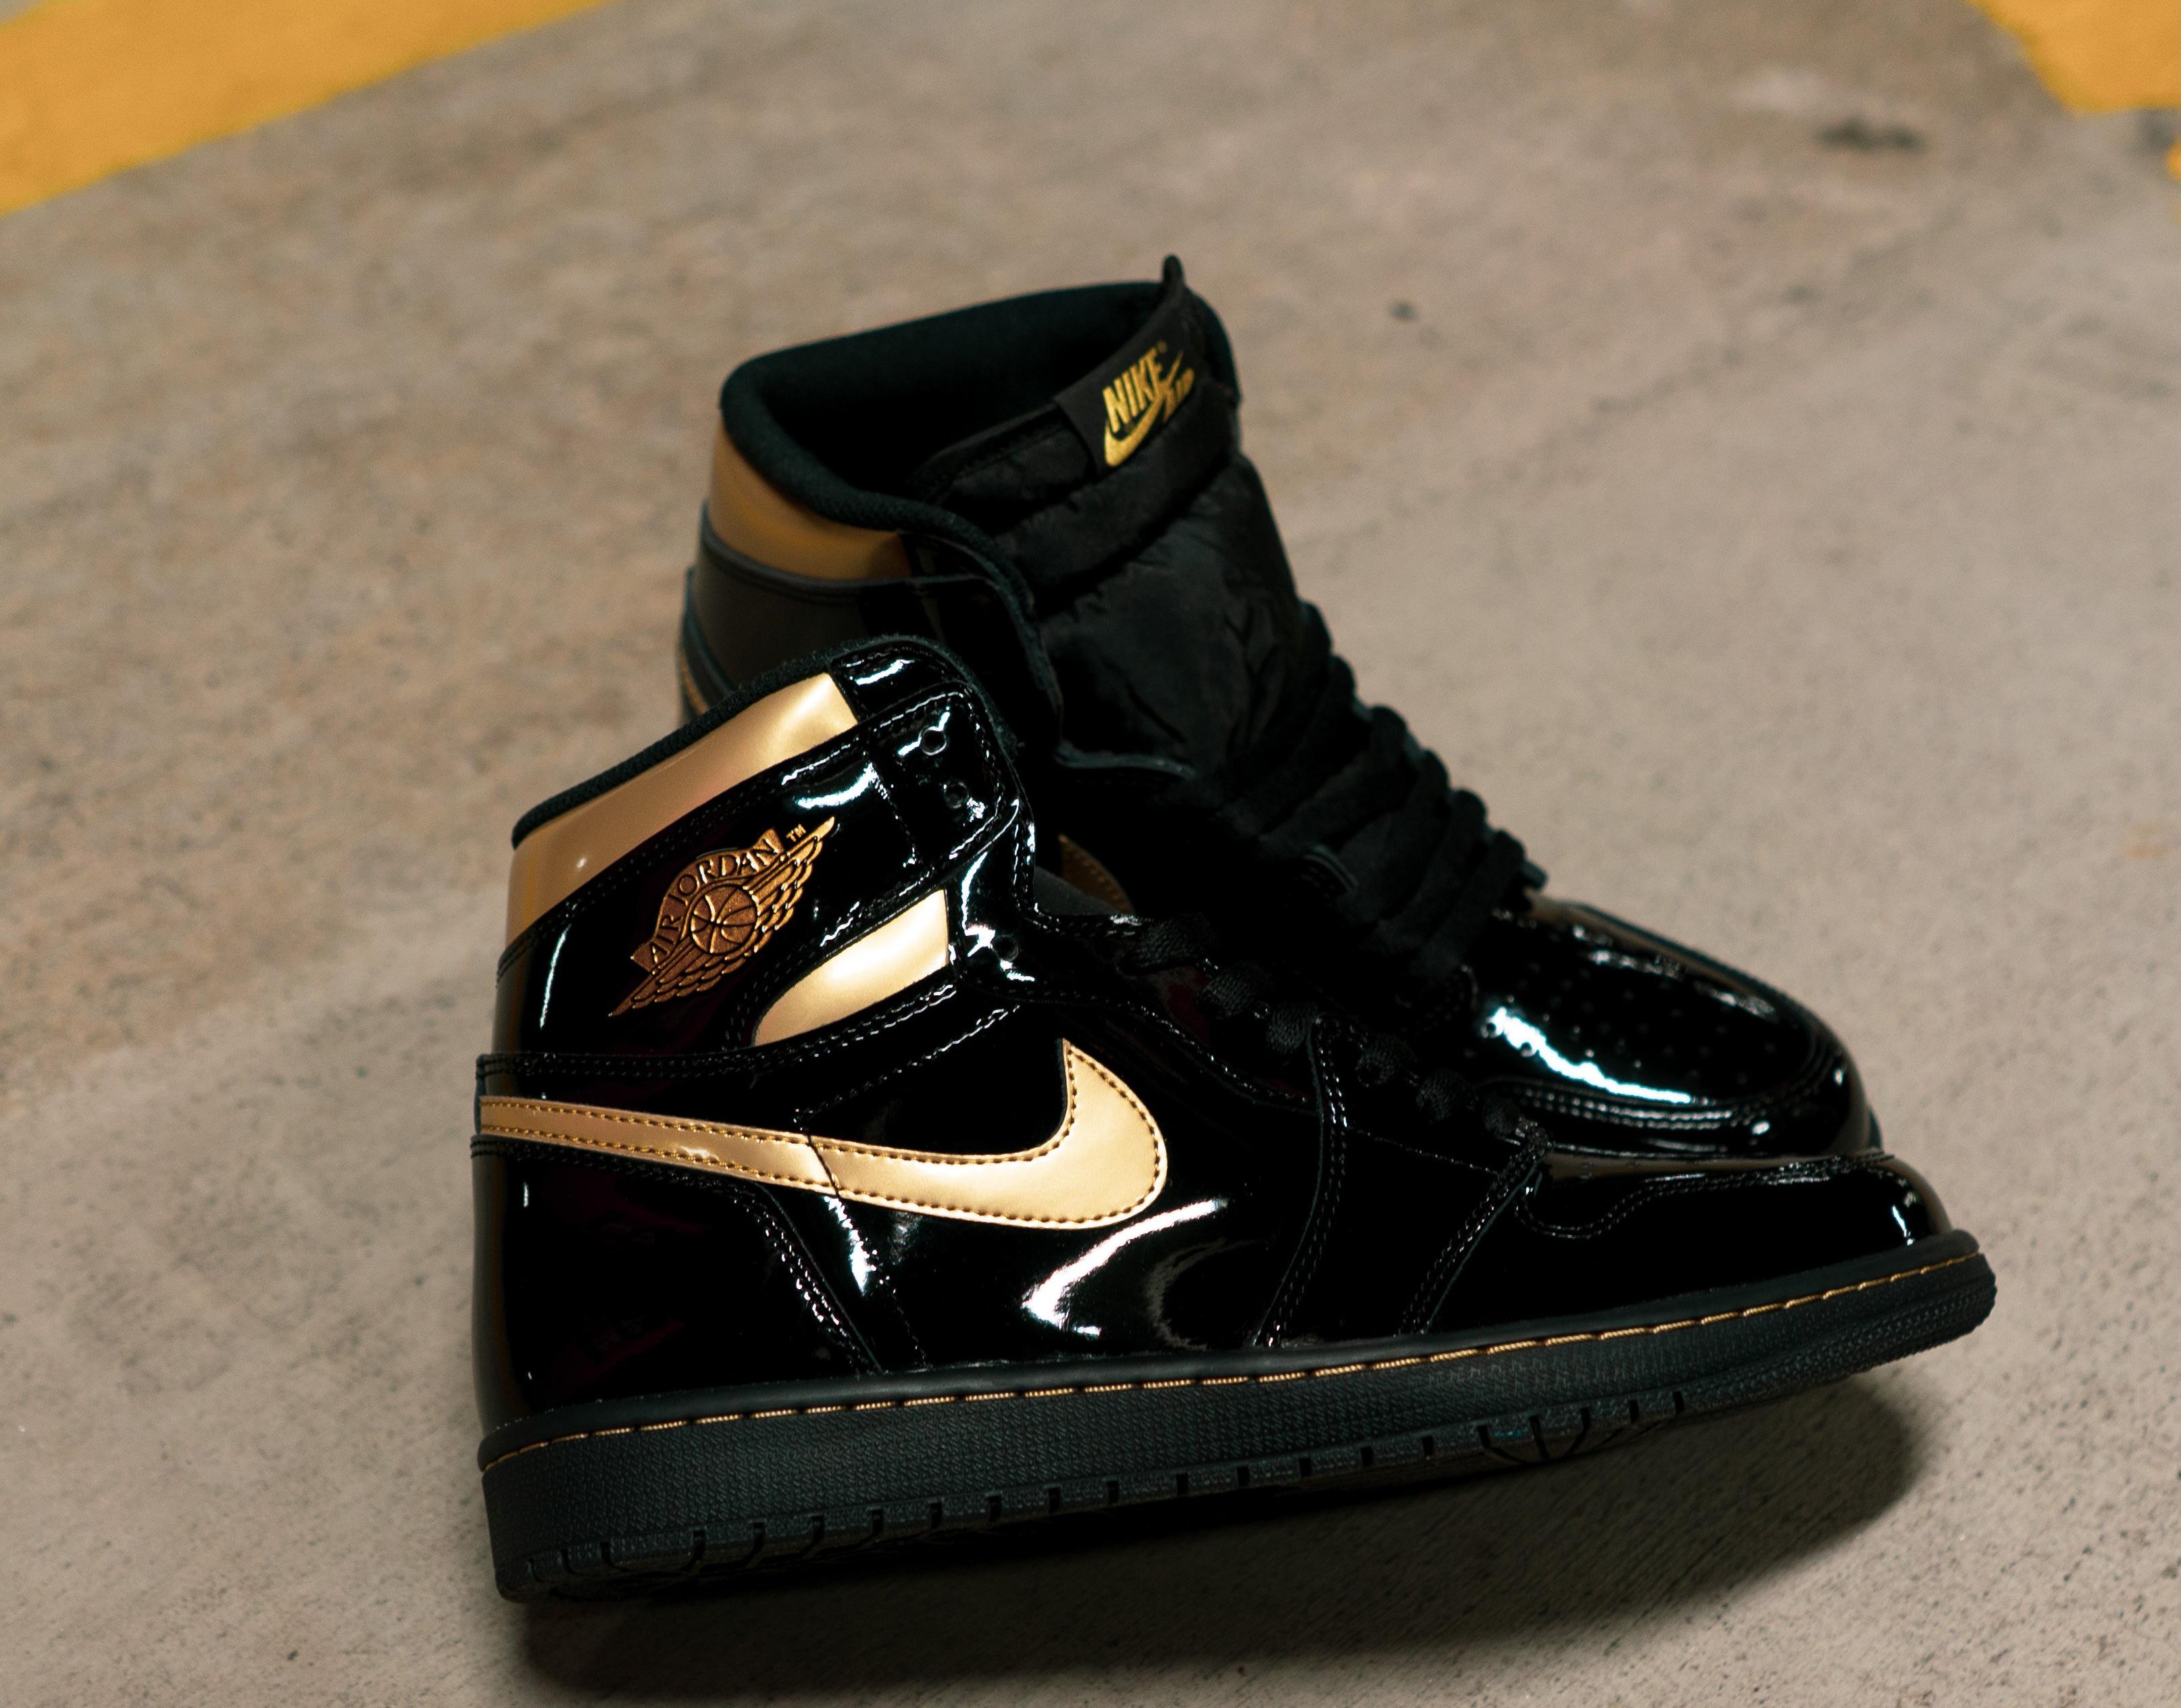 Sneakers Release- Jordan 1 High OG “Black/Gold” Men's and Kids' Grade School Shoe